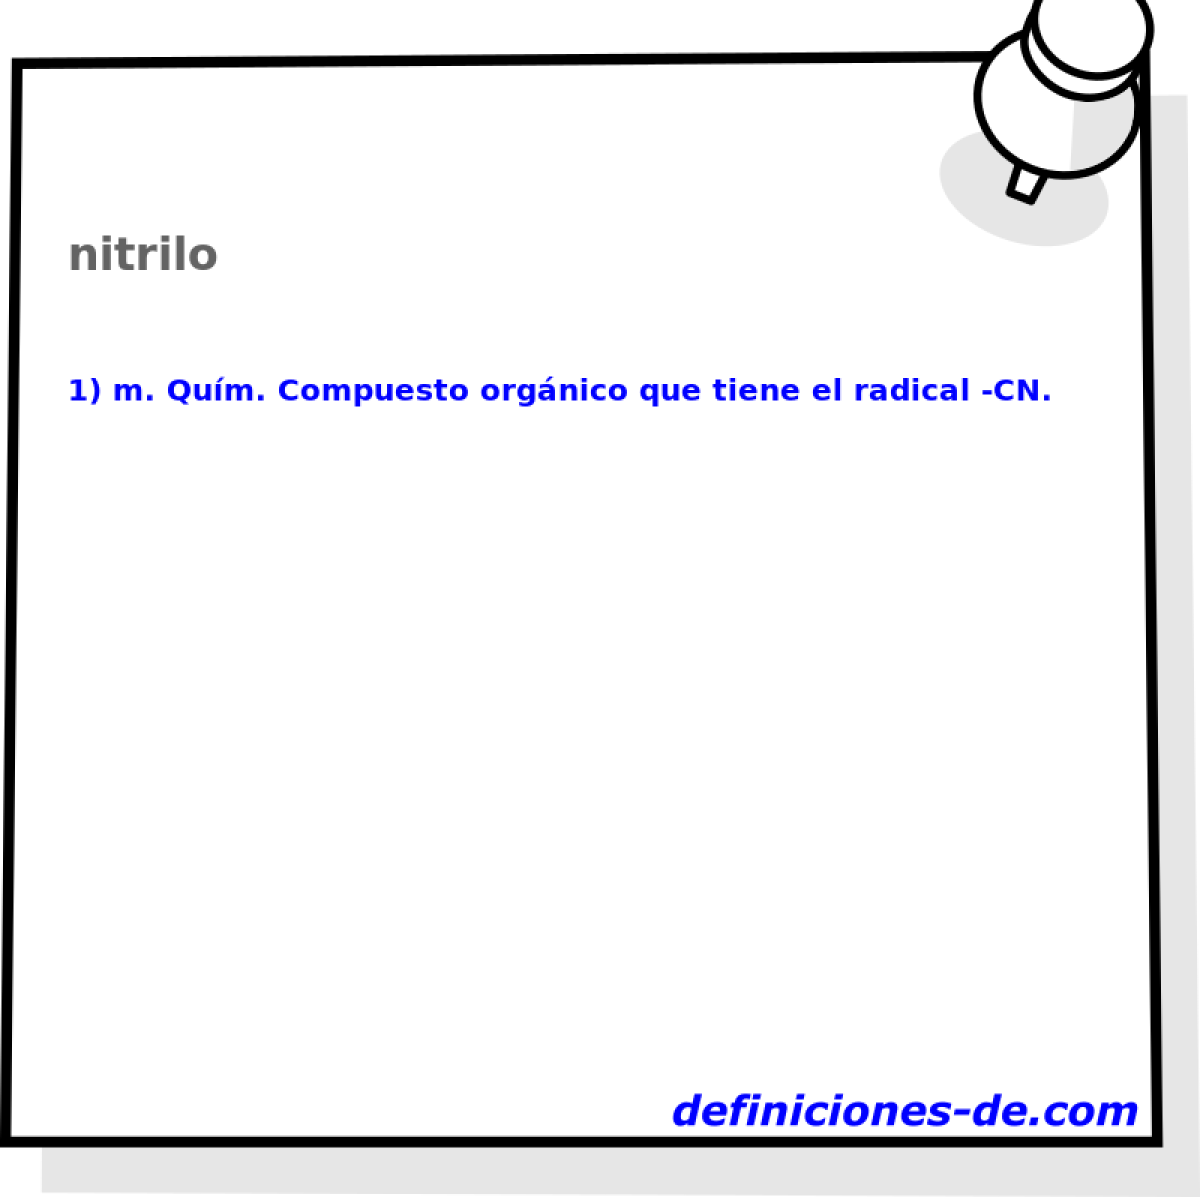 nitrilo 